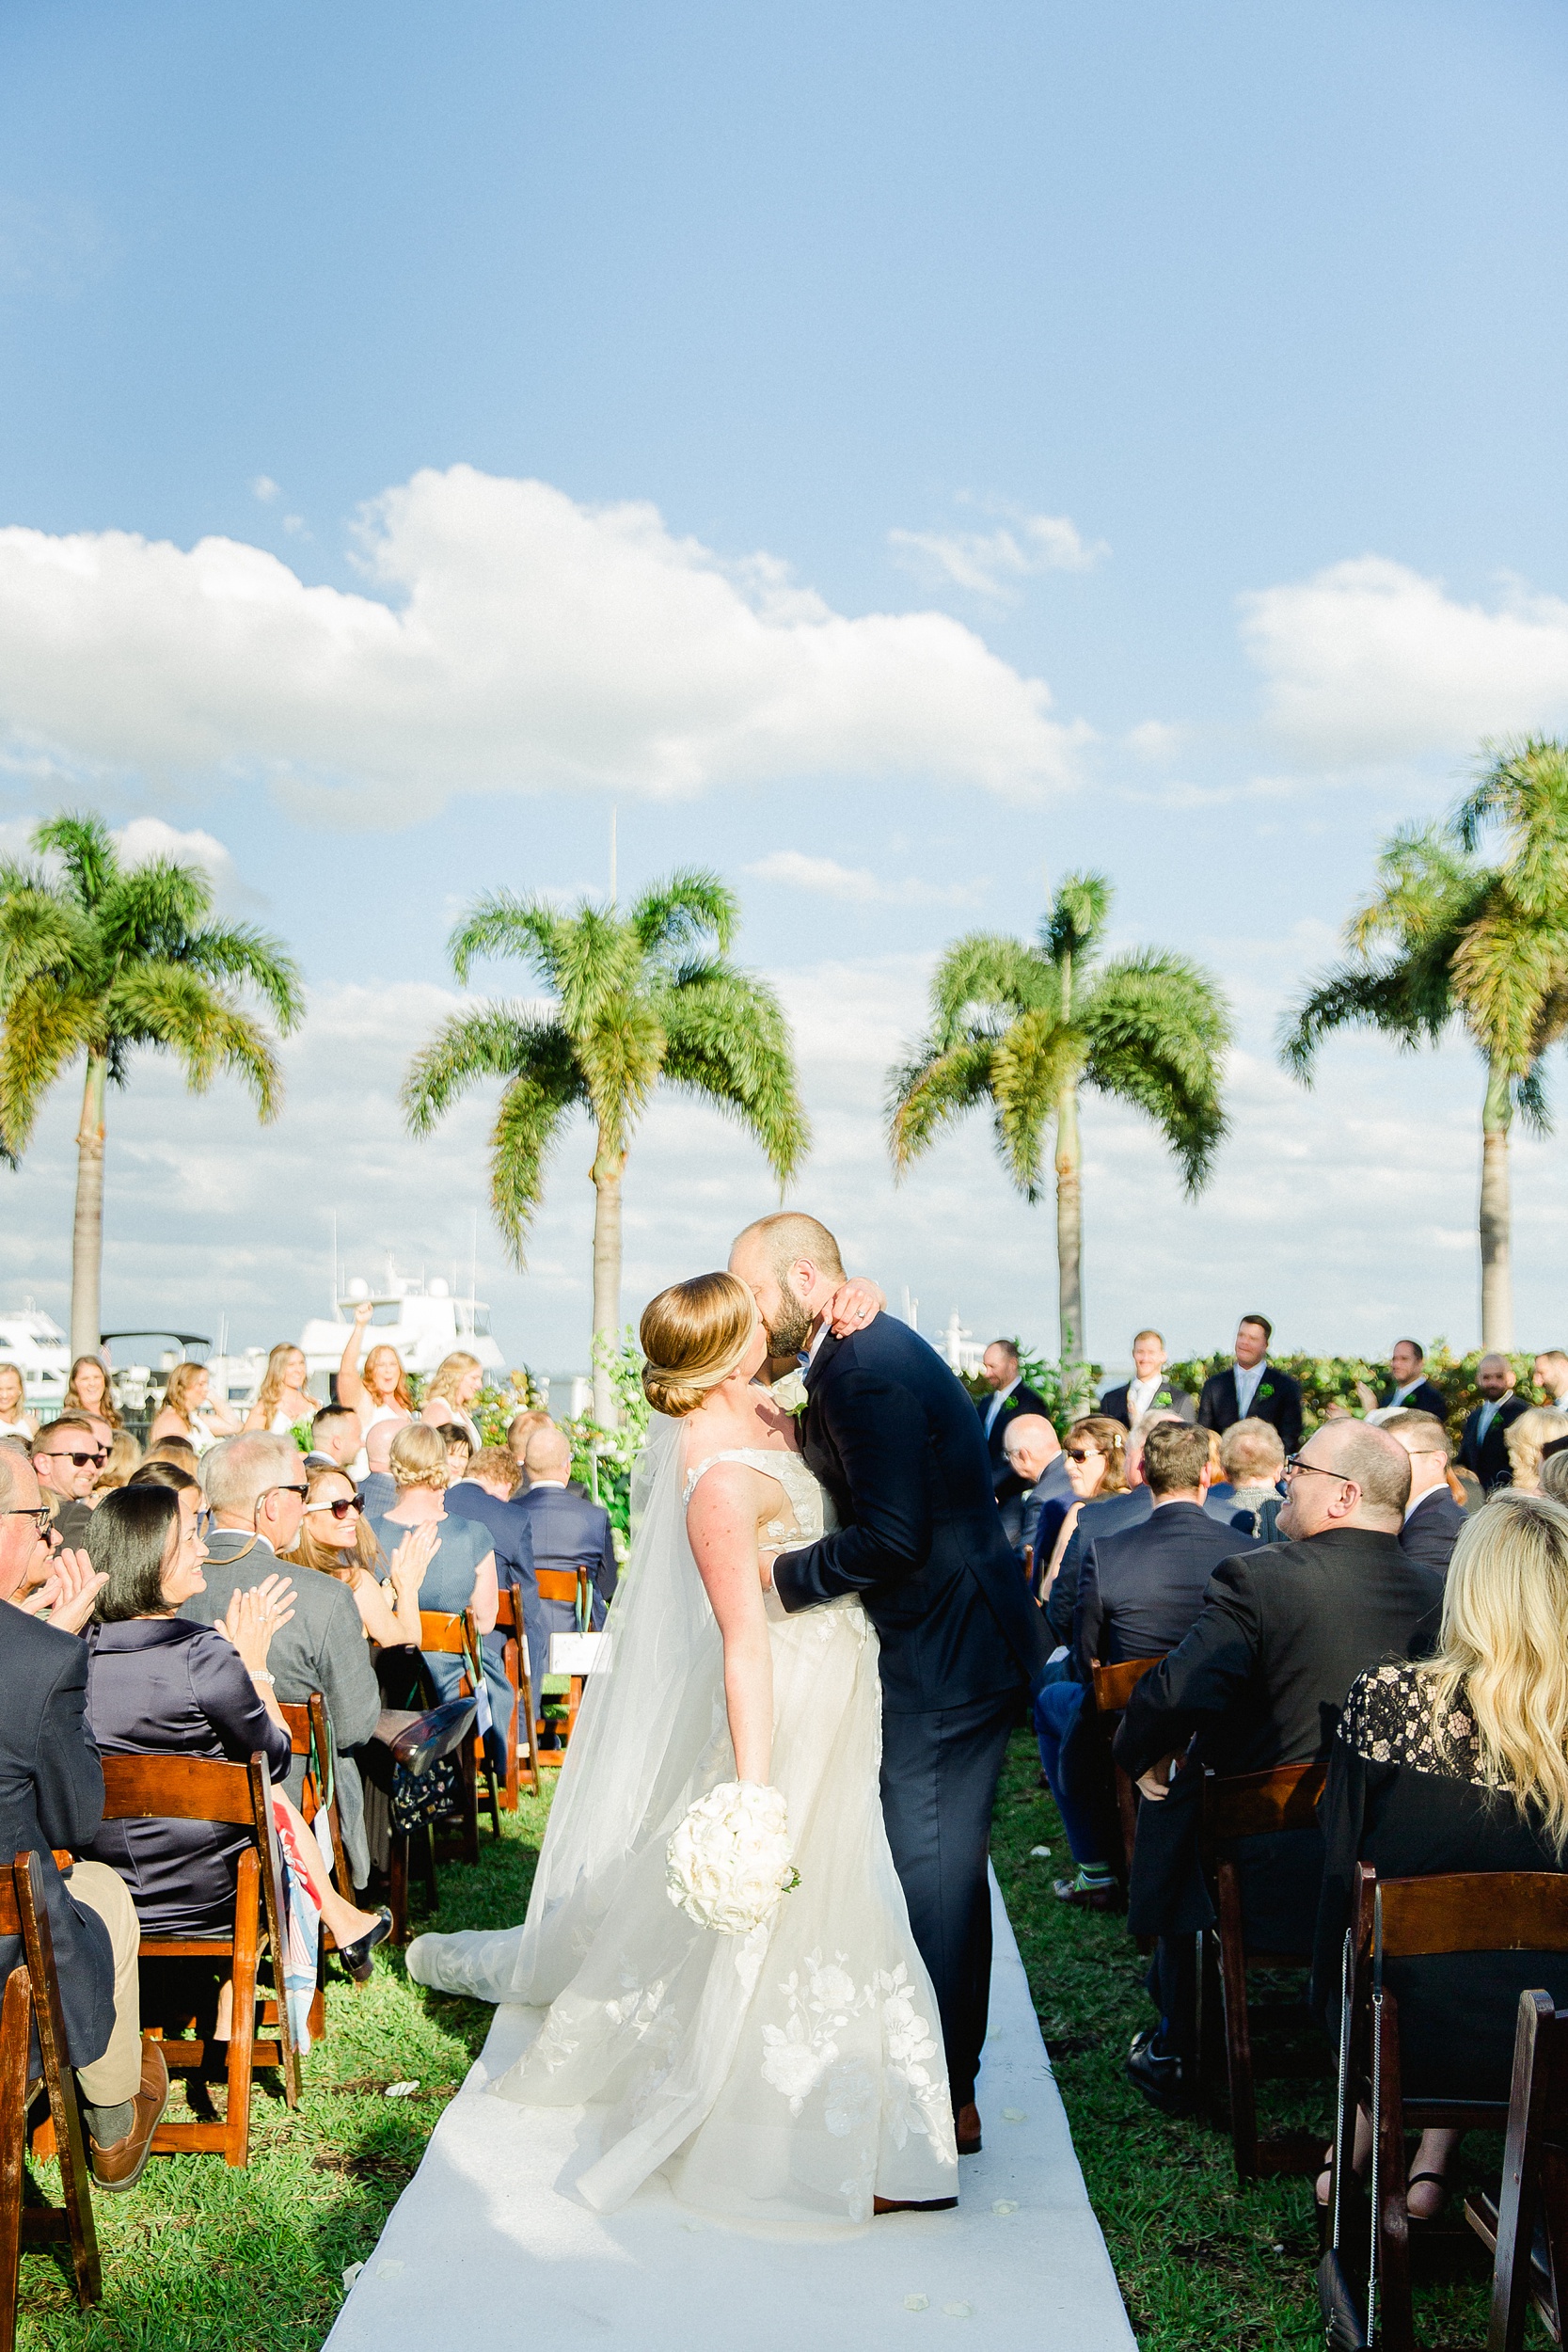 Tampa Yacht Club Wedding | © Ailyn La Torre Photography 2020